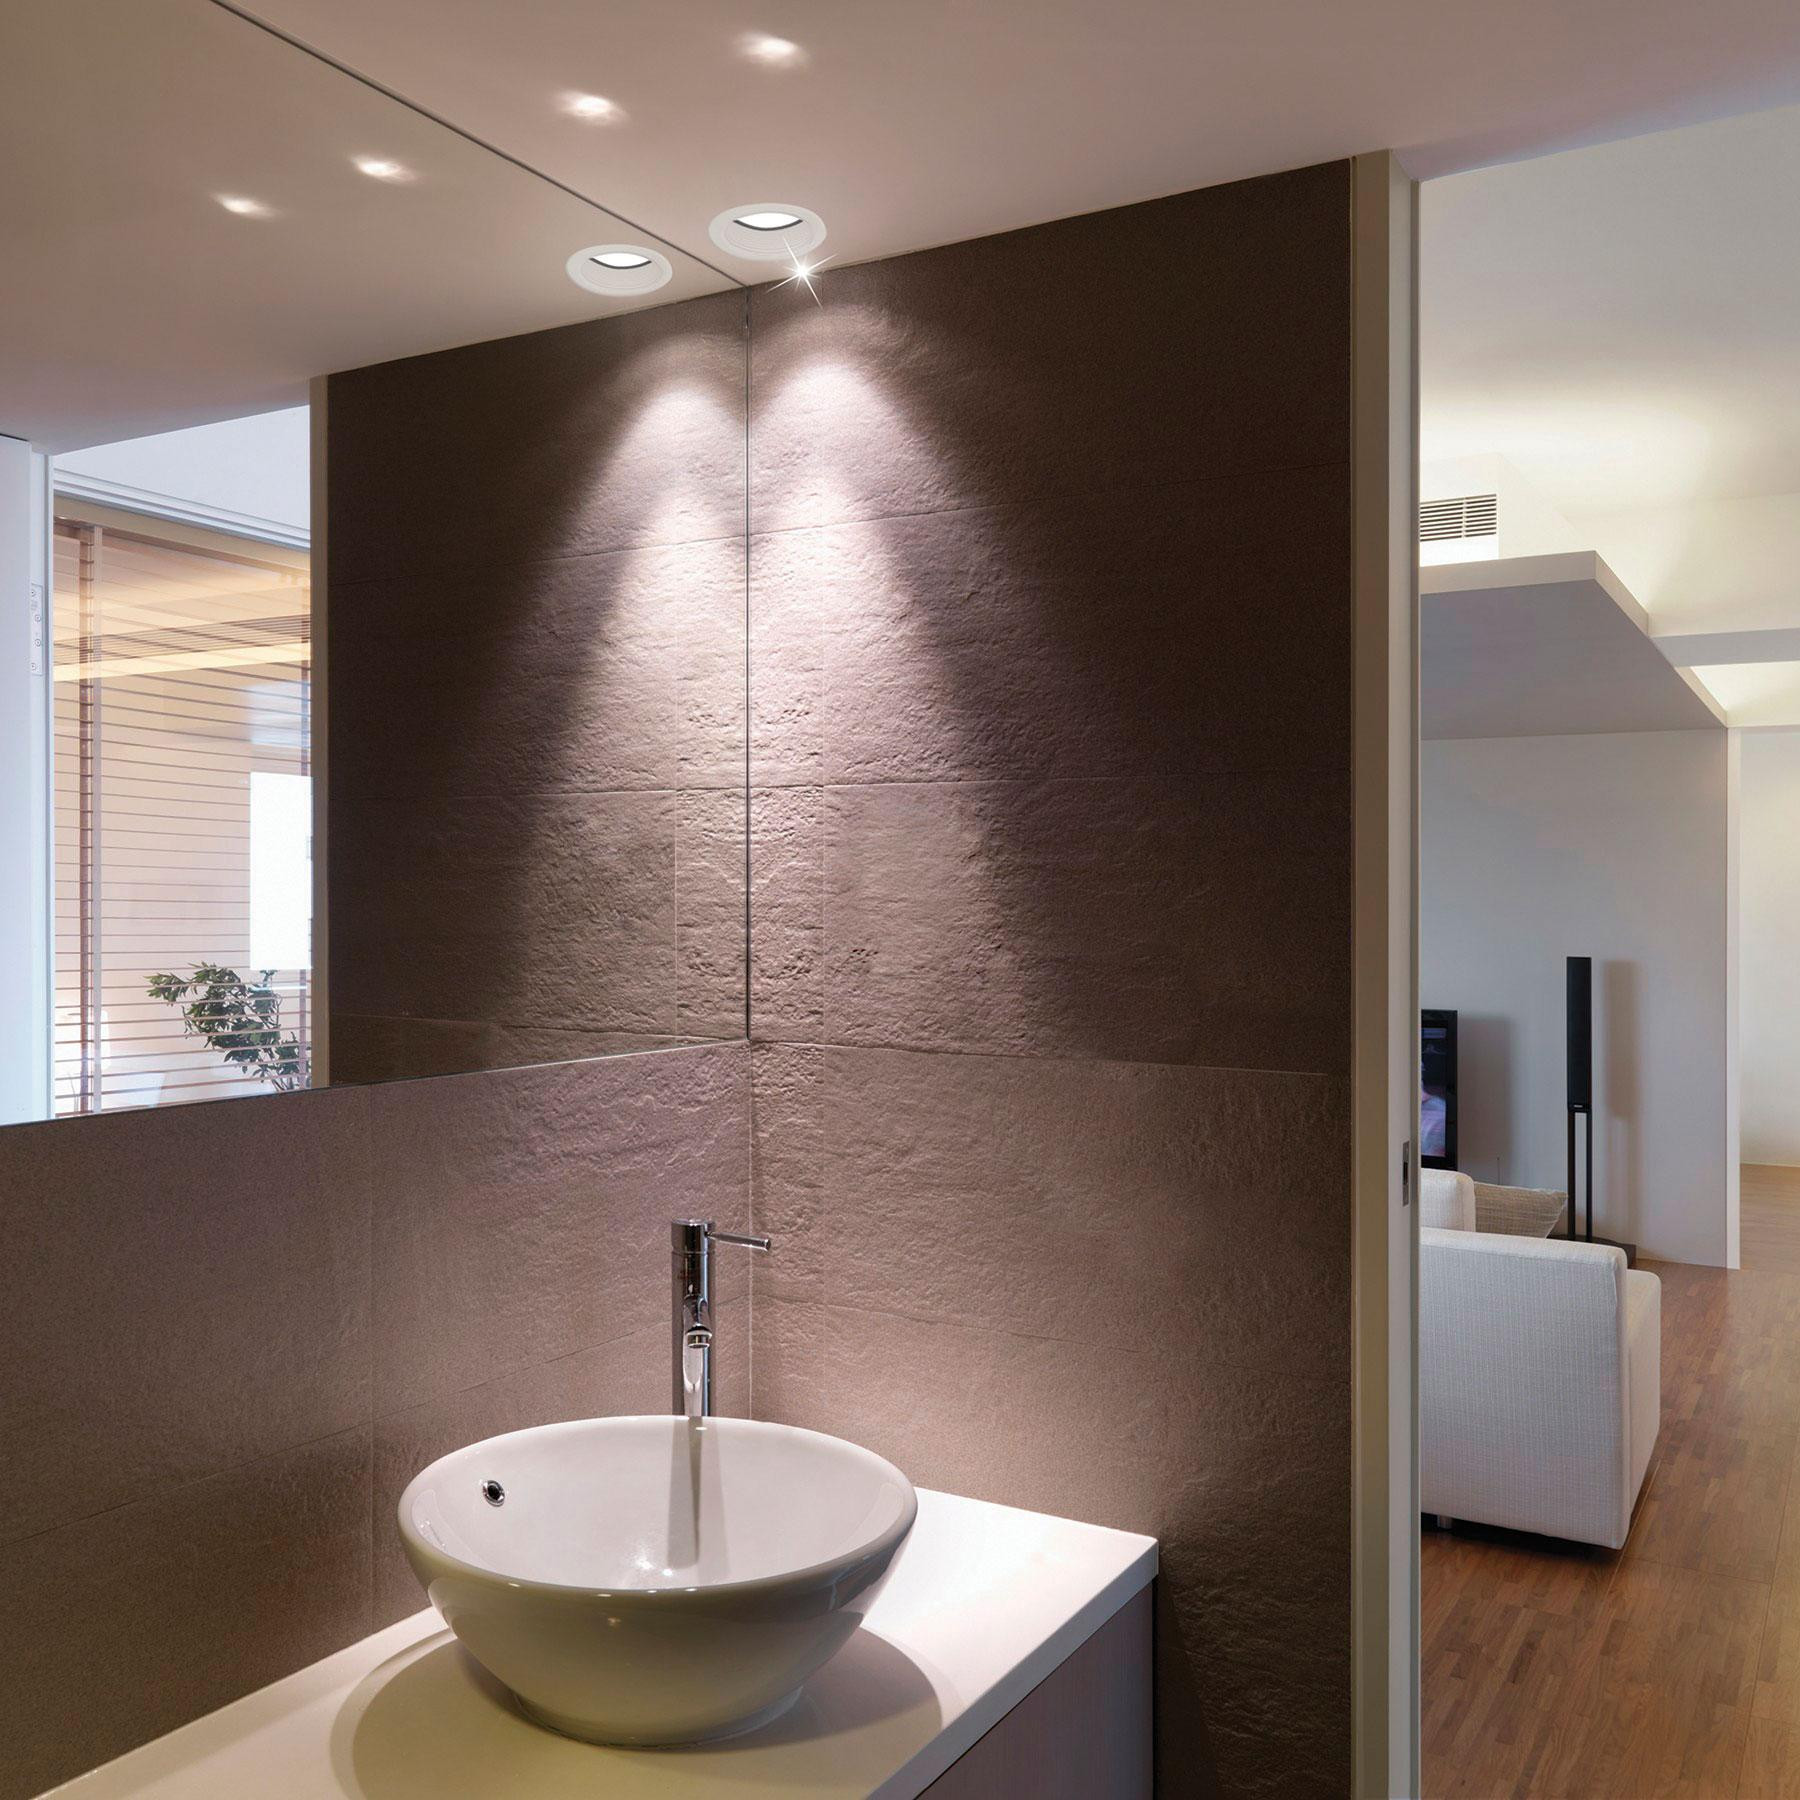 Recessed Lighting In Bathroom
 Recessed Lighting In Bathroom Ideas Small House Interior